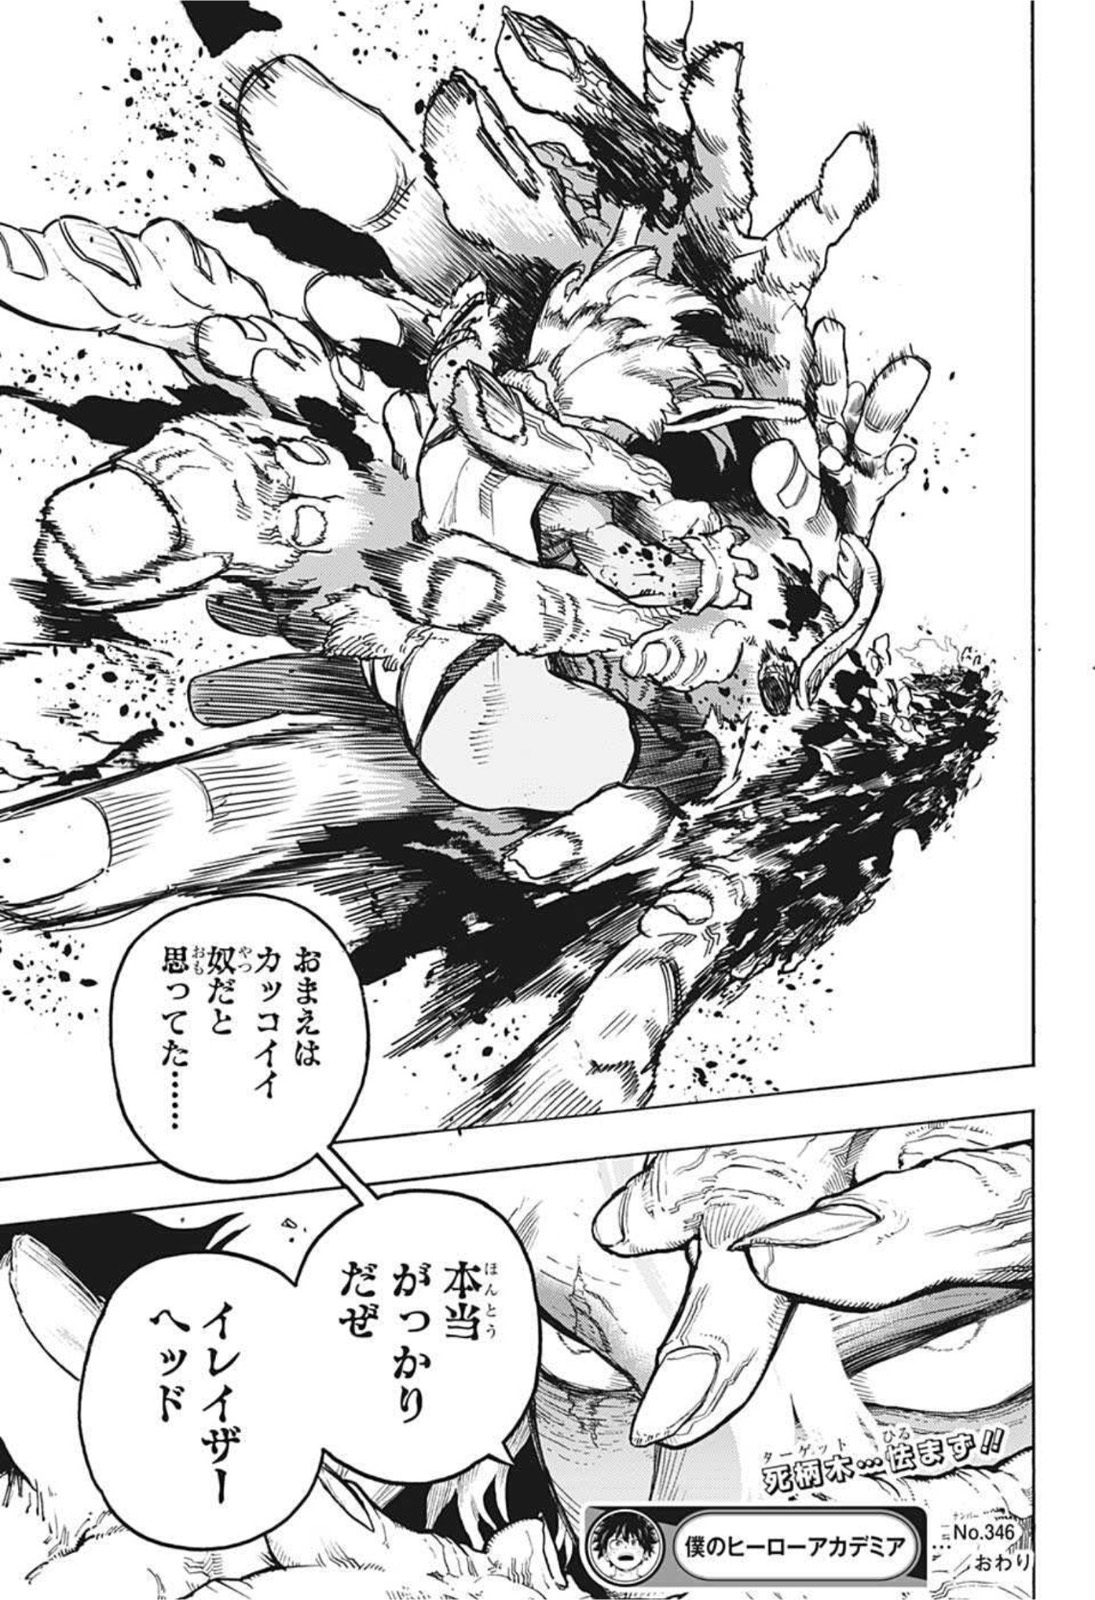 Boku no Hero Academia - Chapter 346 - Page 15